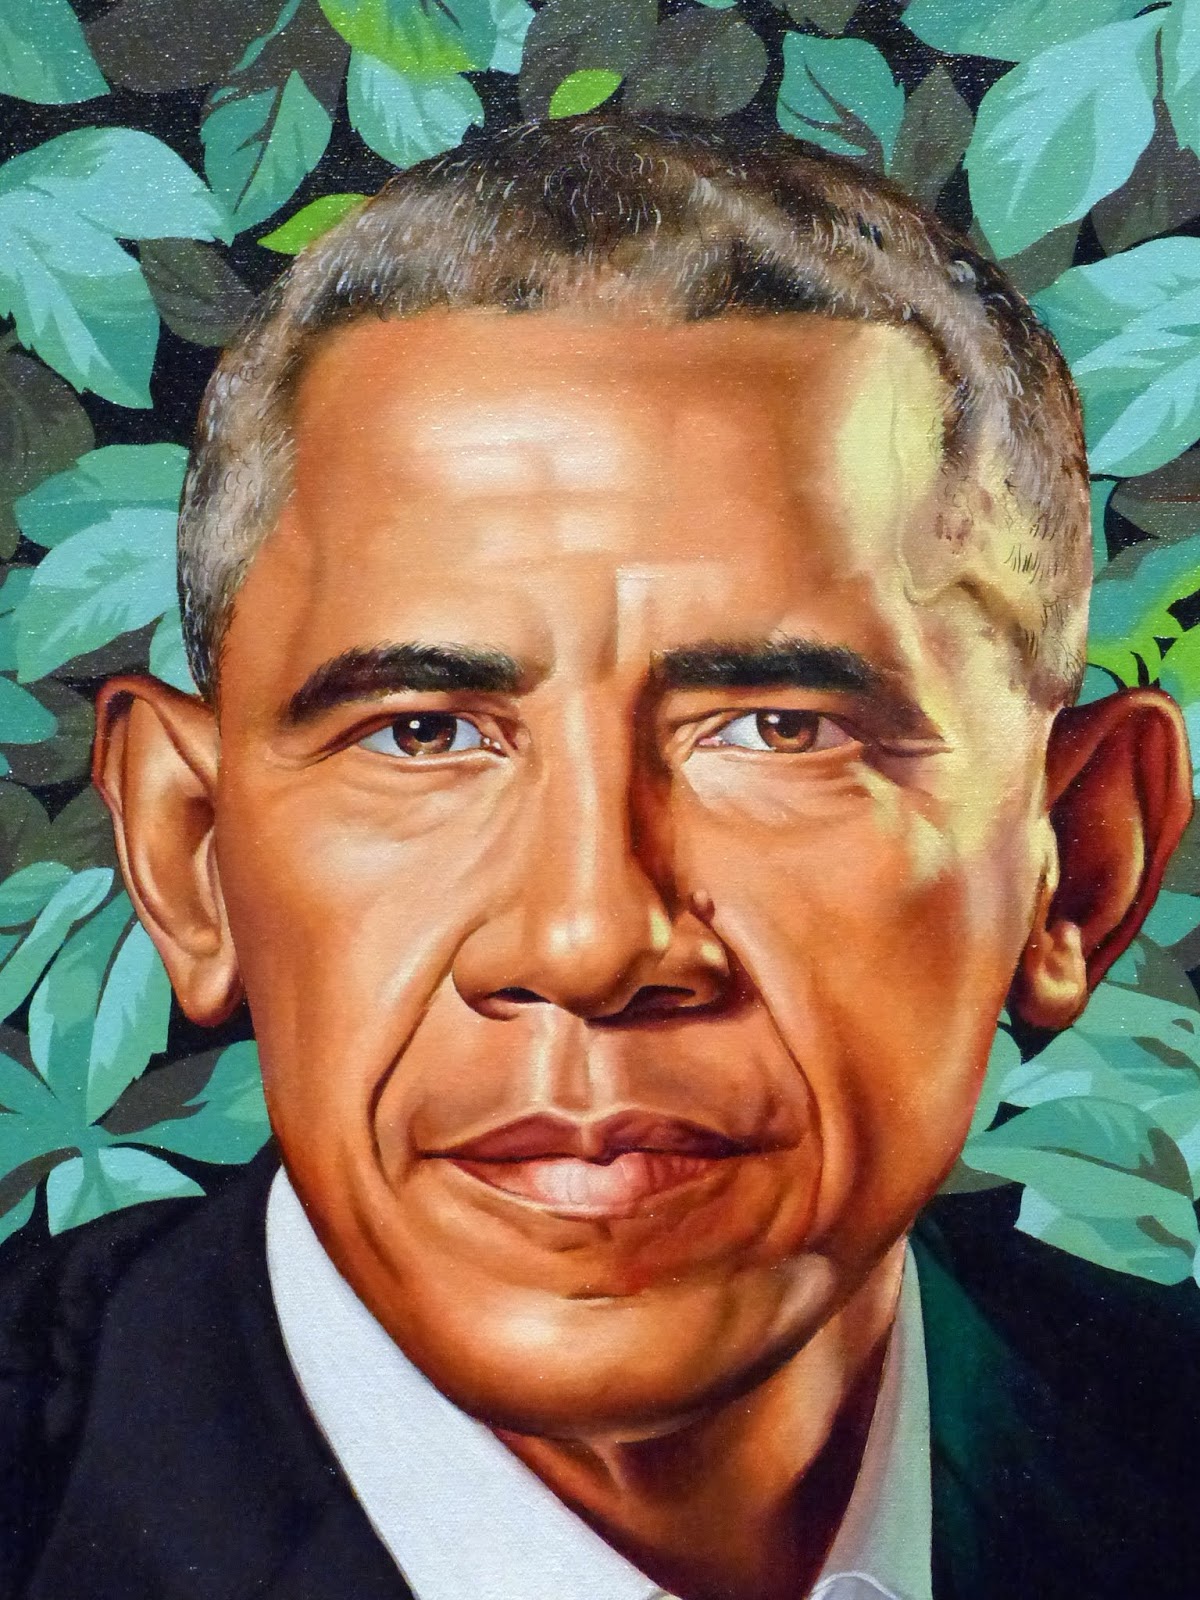 The Portrait Gallery: Barack Obama